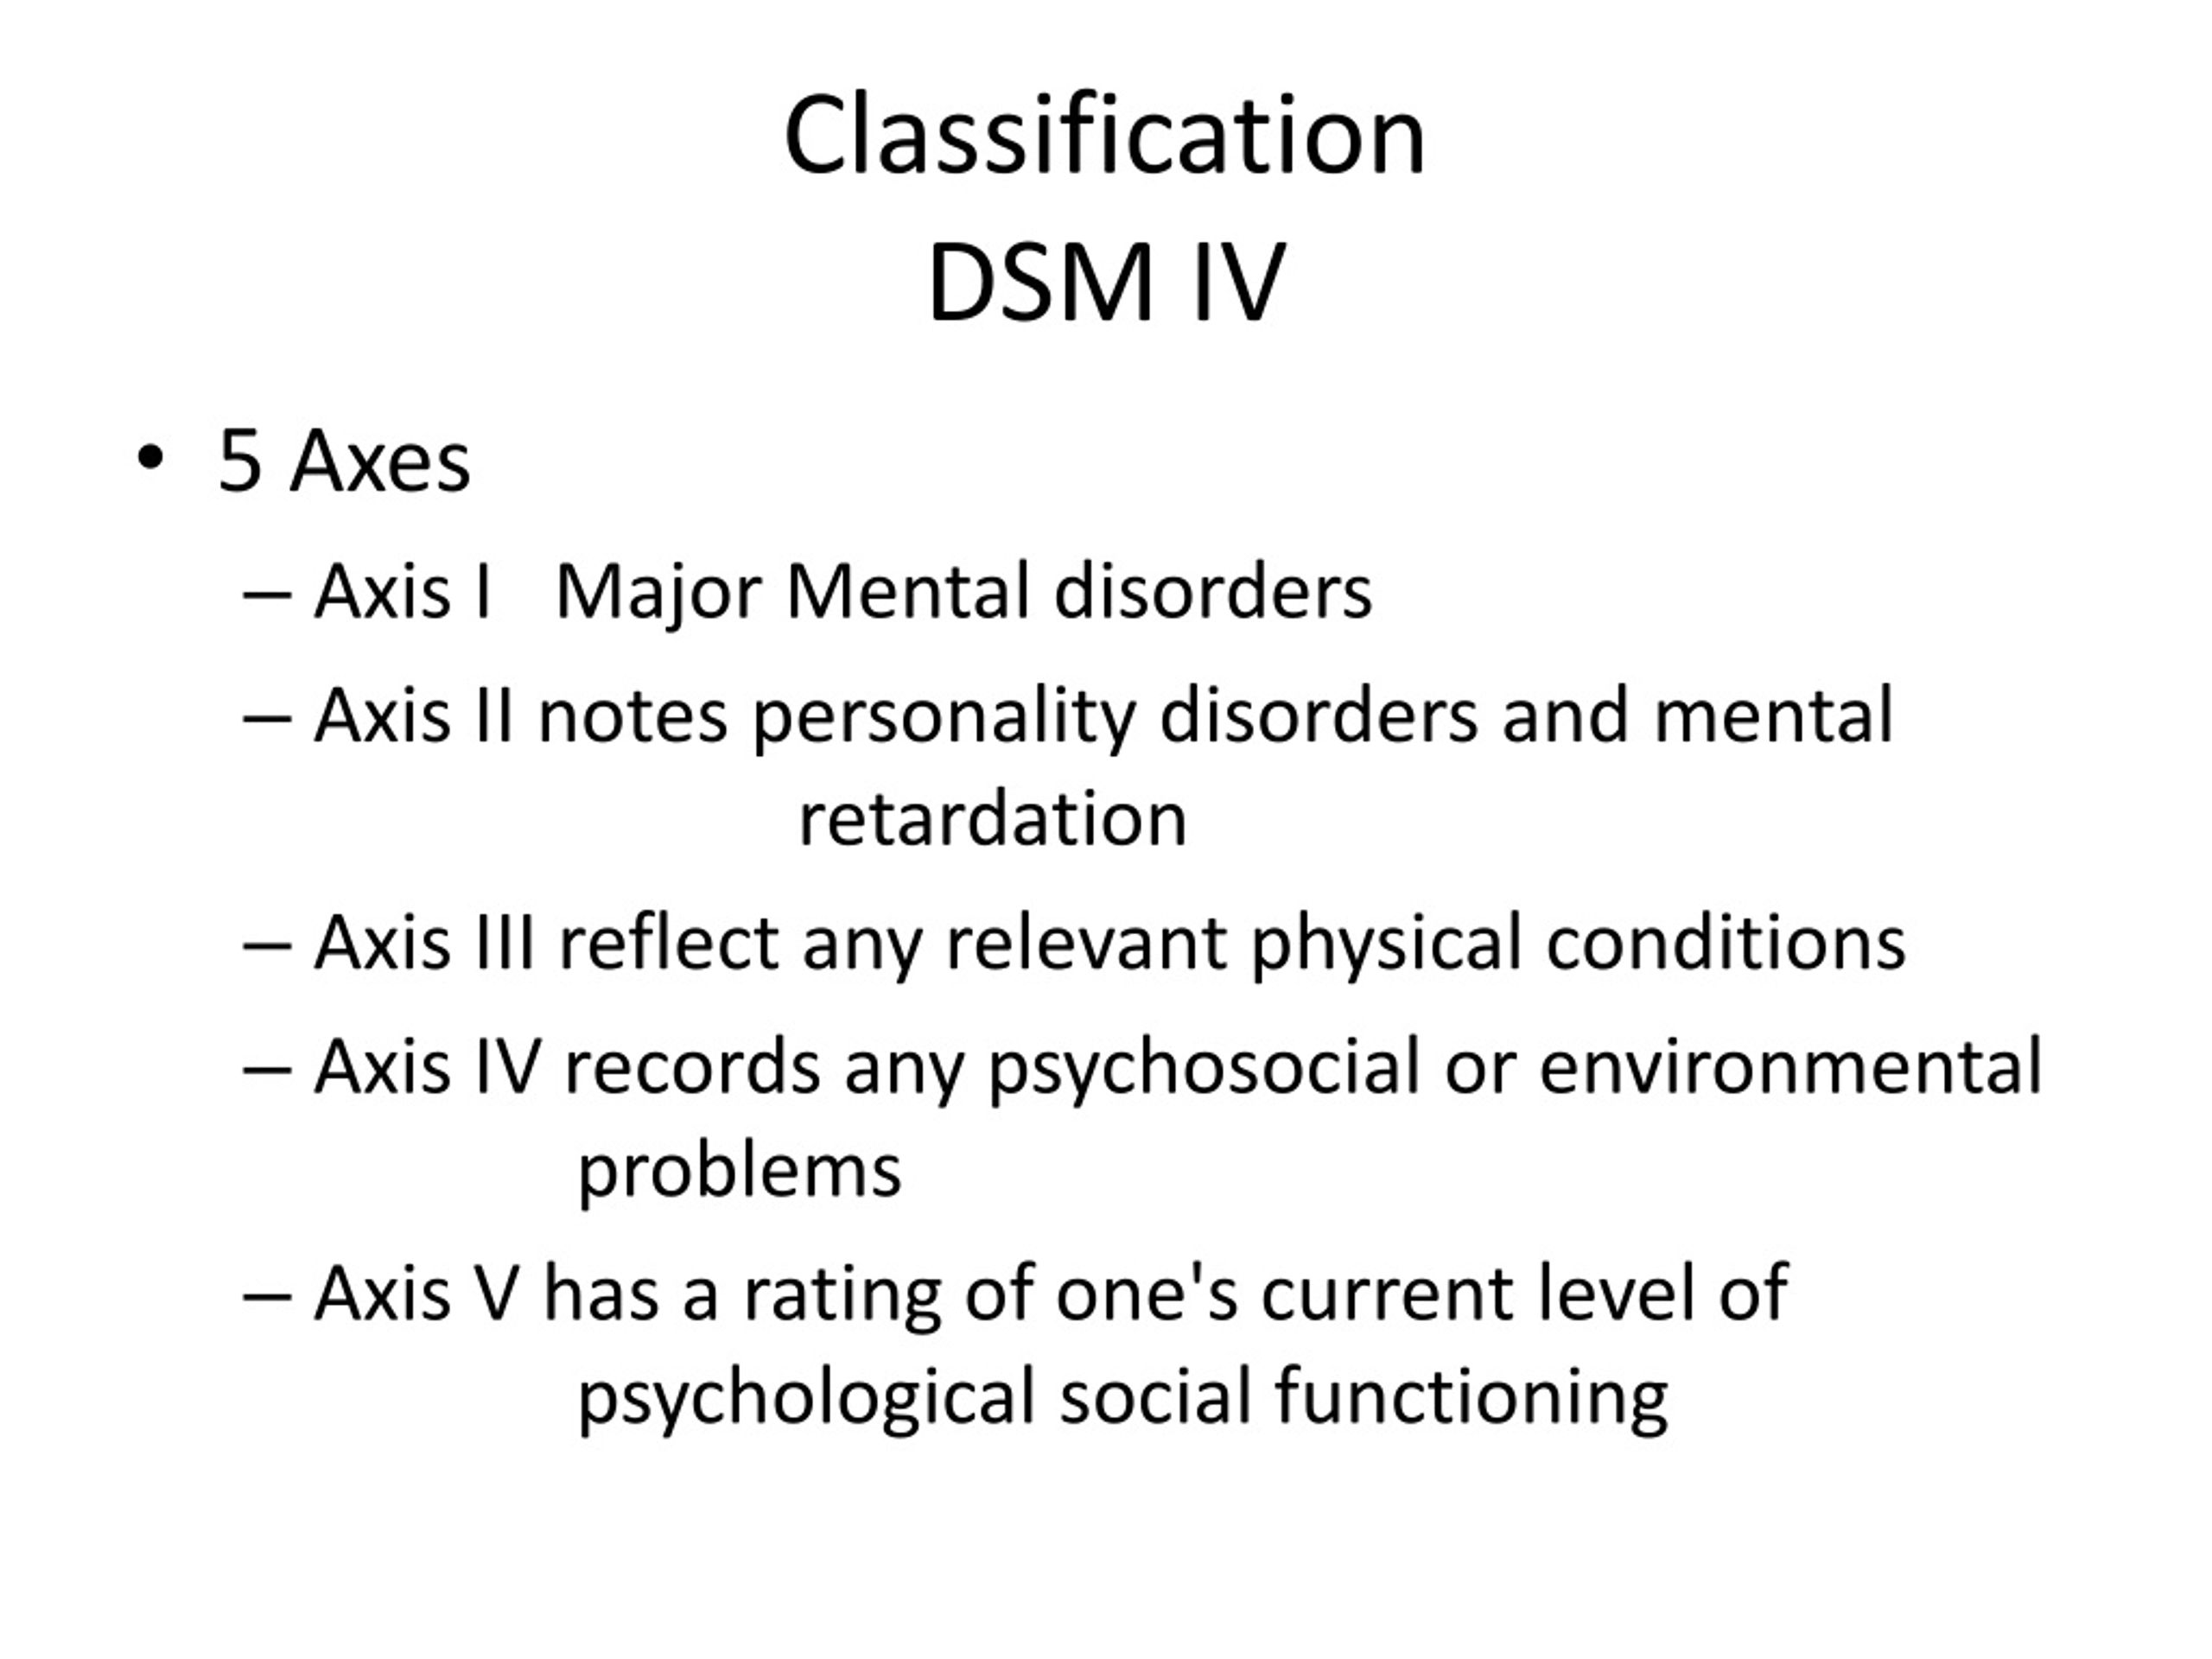 classification dsm iv.